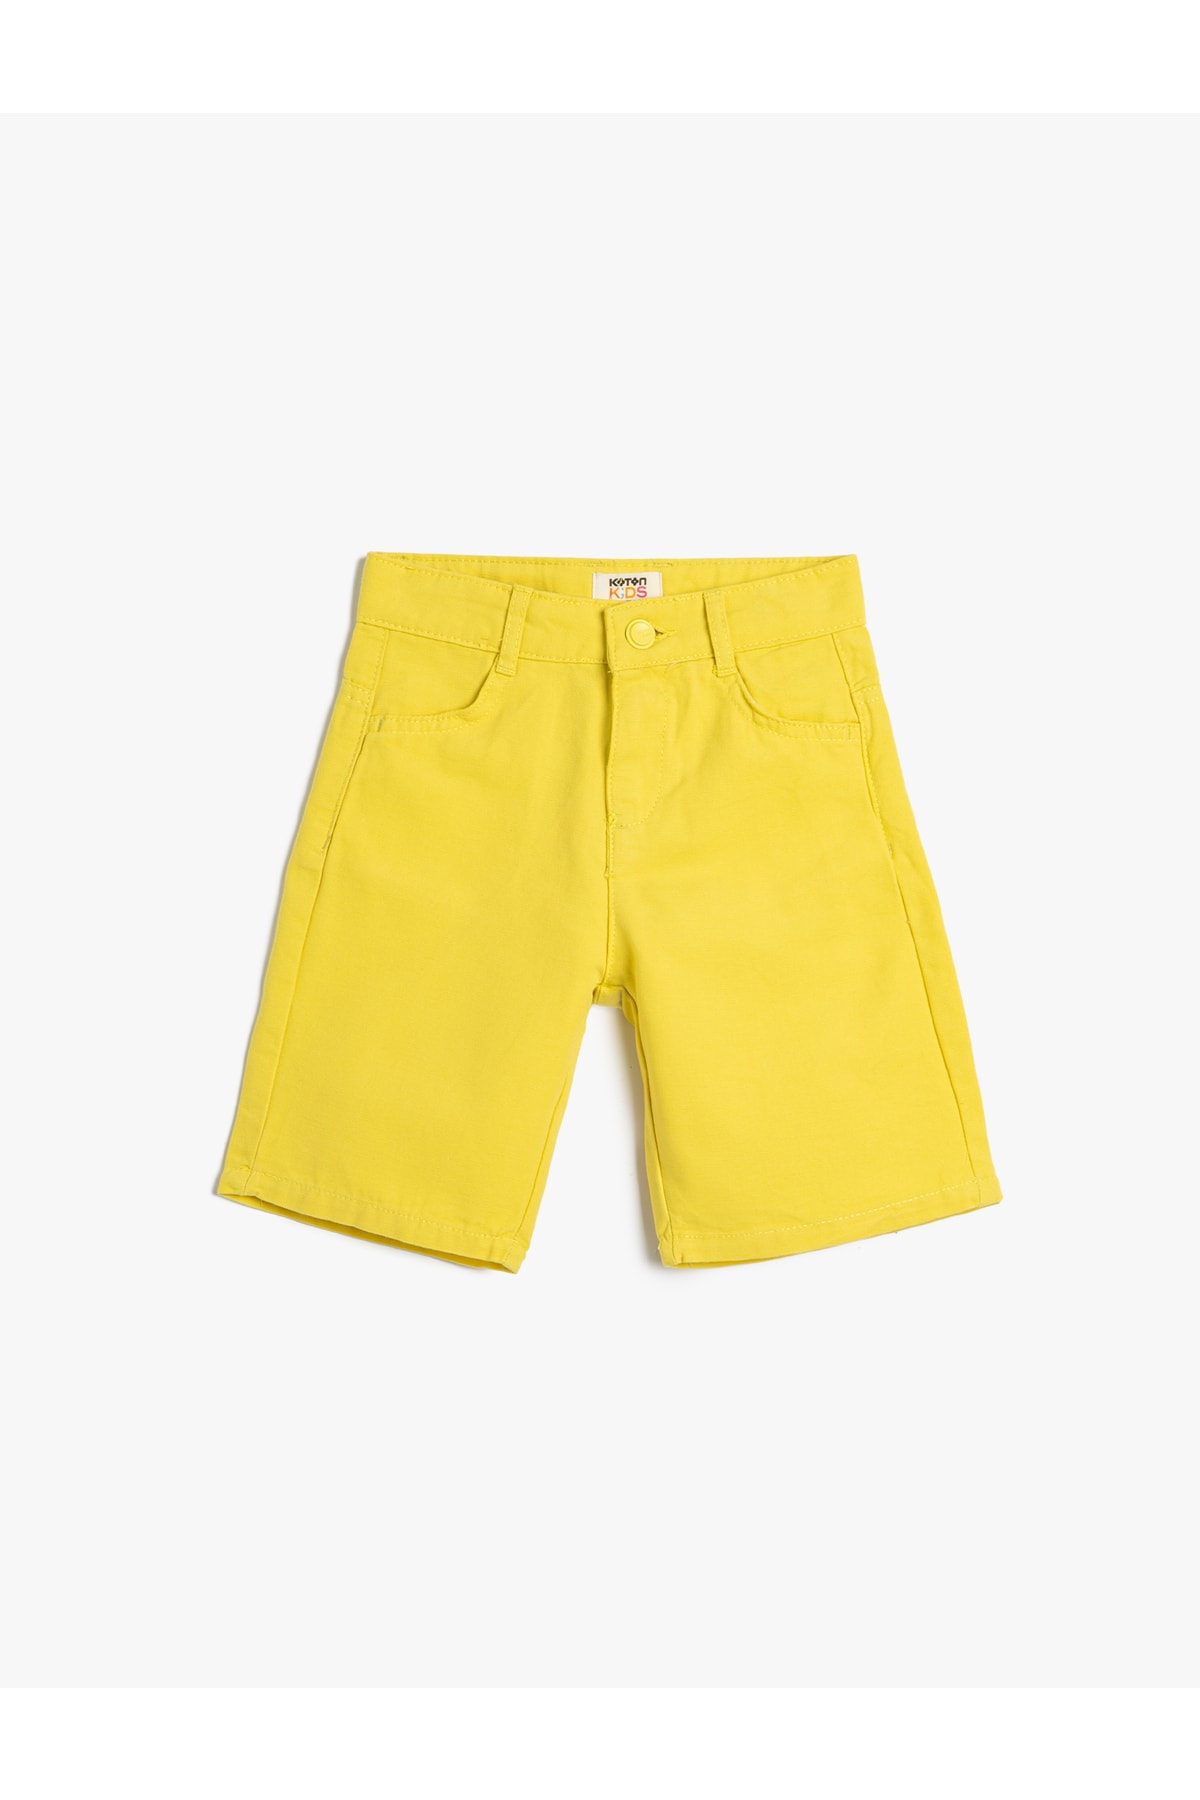 Levně Koton Chino Shorts with Adjustable Elastic Waist Pockets Cotton